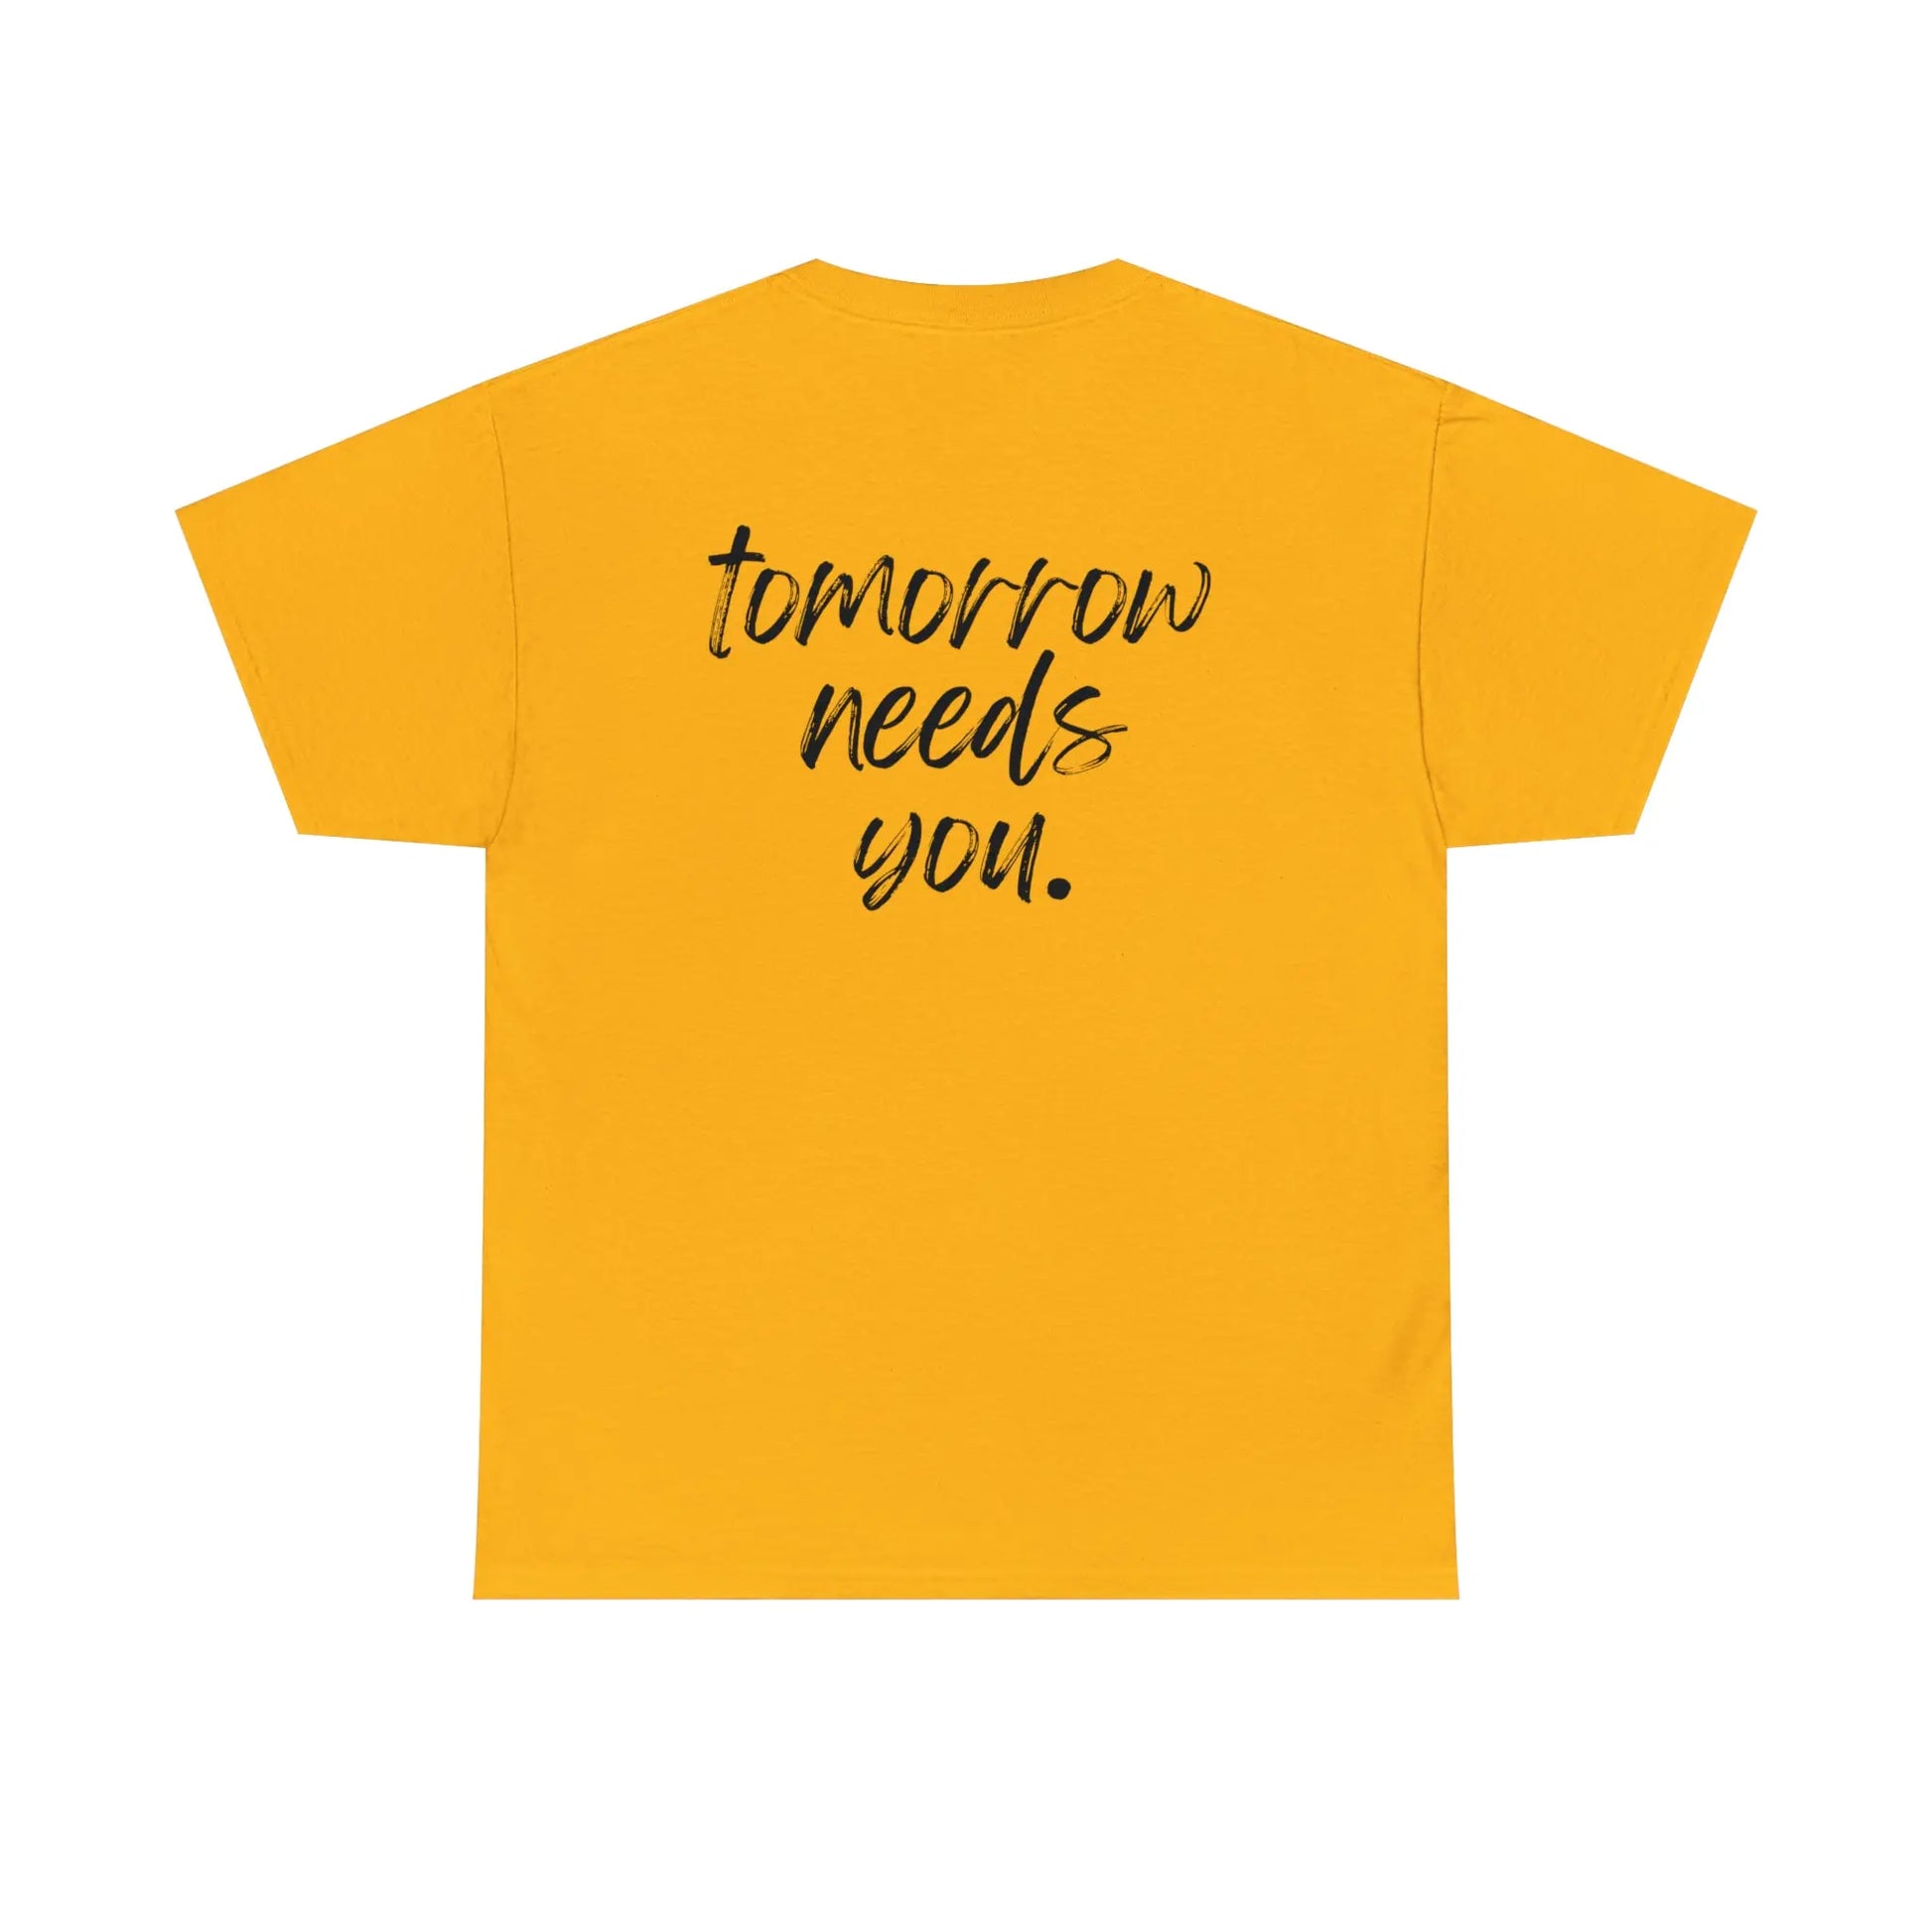 Stay Tomorrow Needs You T Shirt Printify